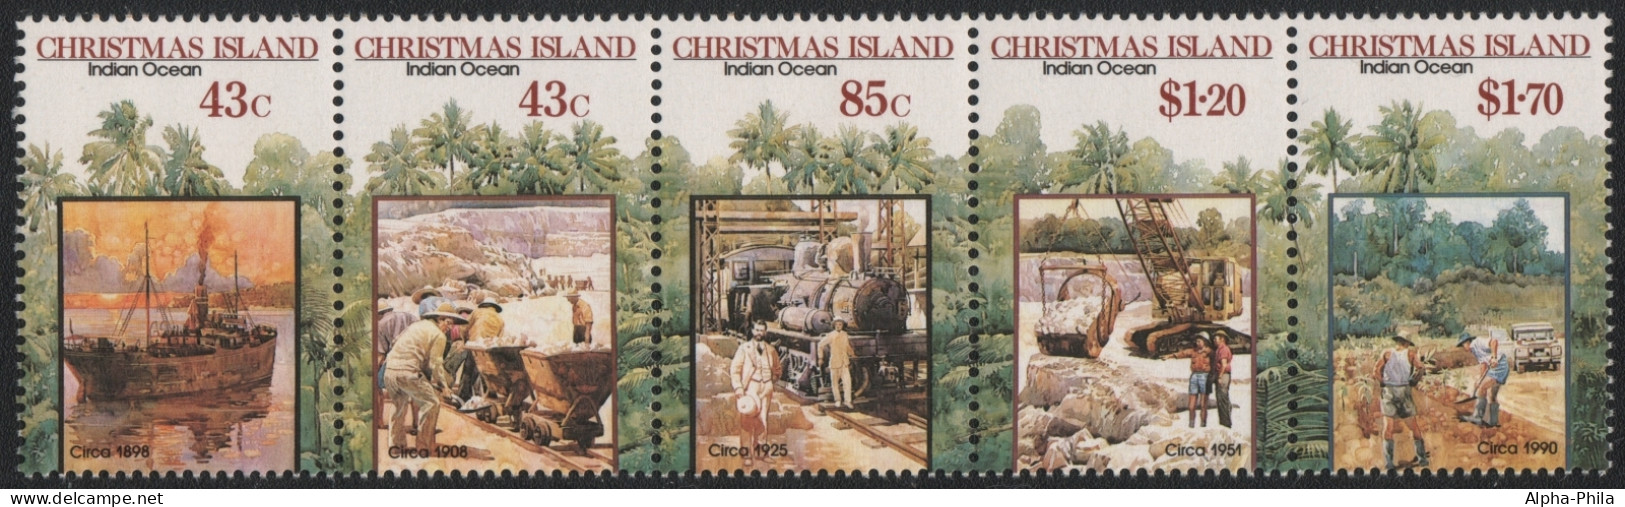 Weihnachtsinsel 1991 - Mi-Nr. 324-328 ** - MNH - Phosphatabbau - Christmas Island